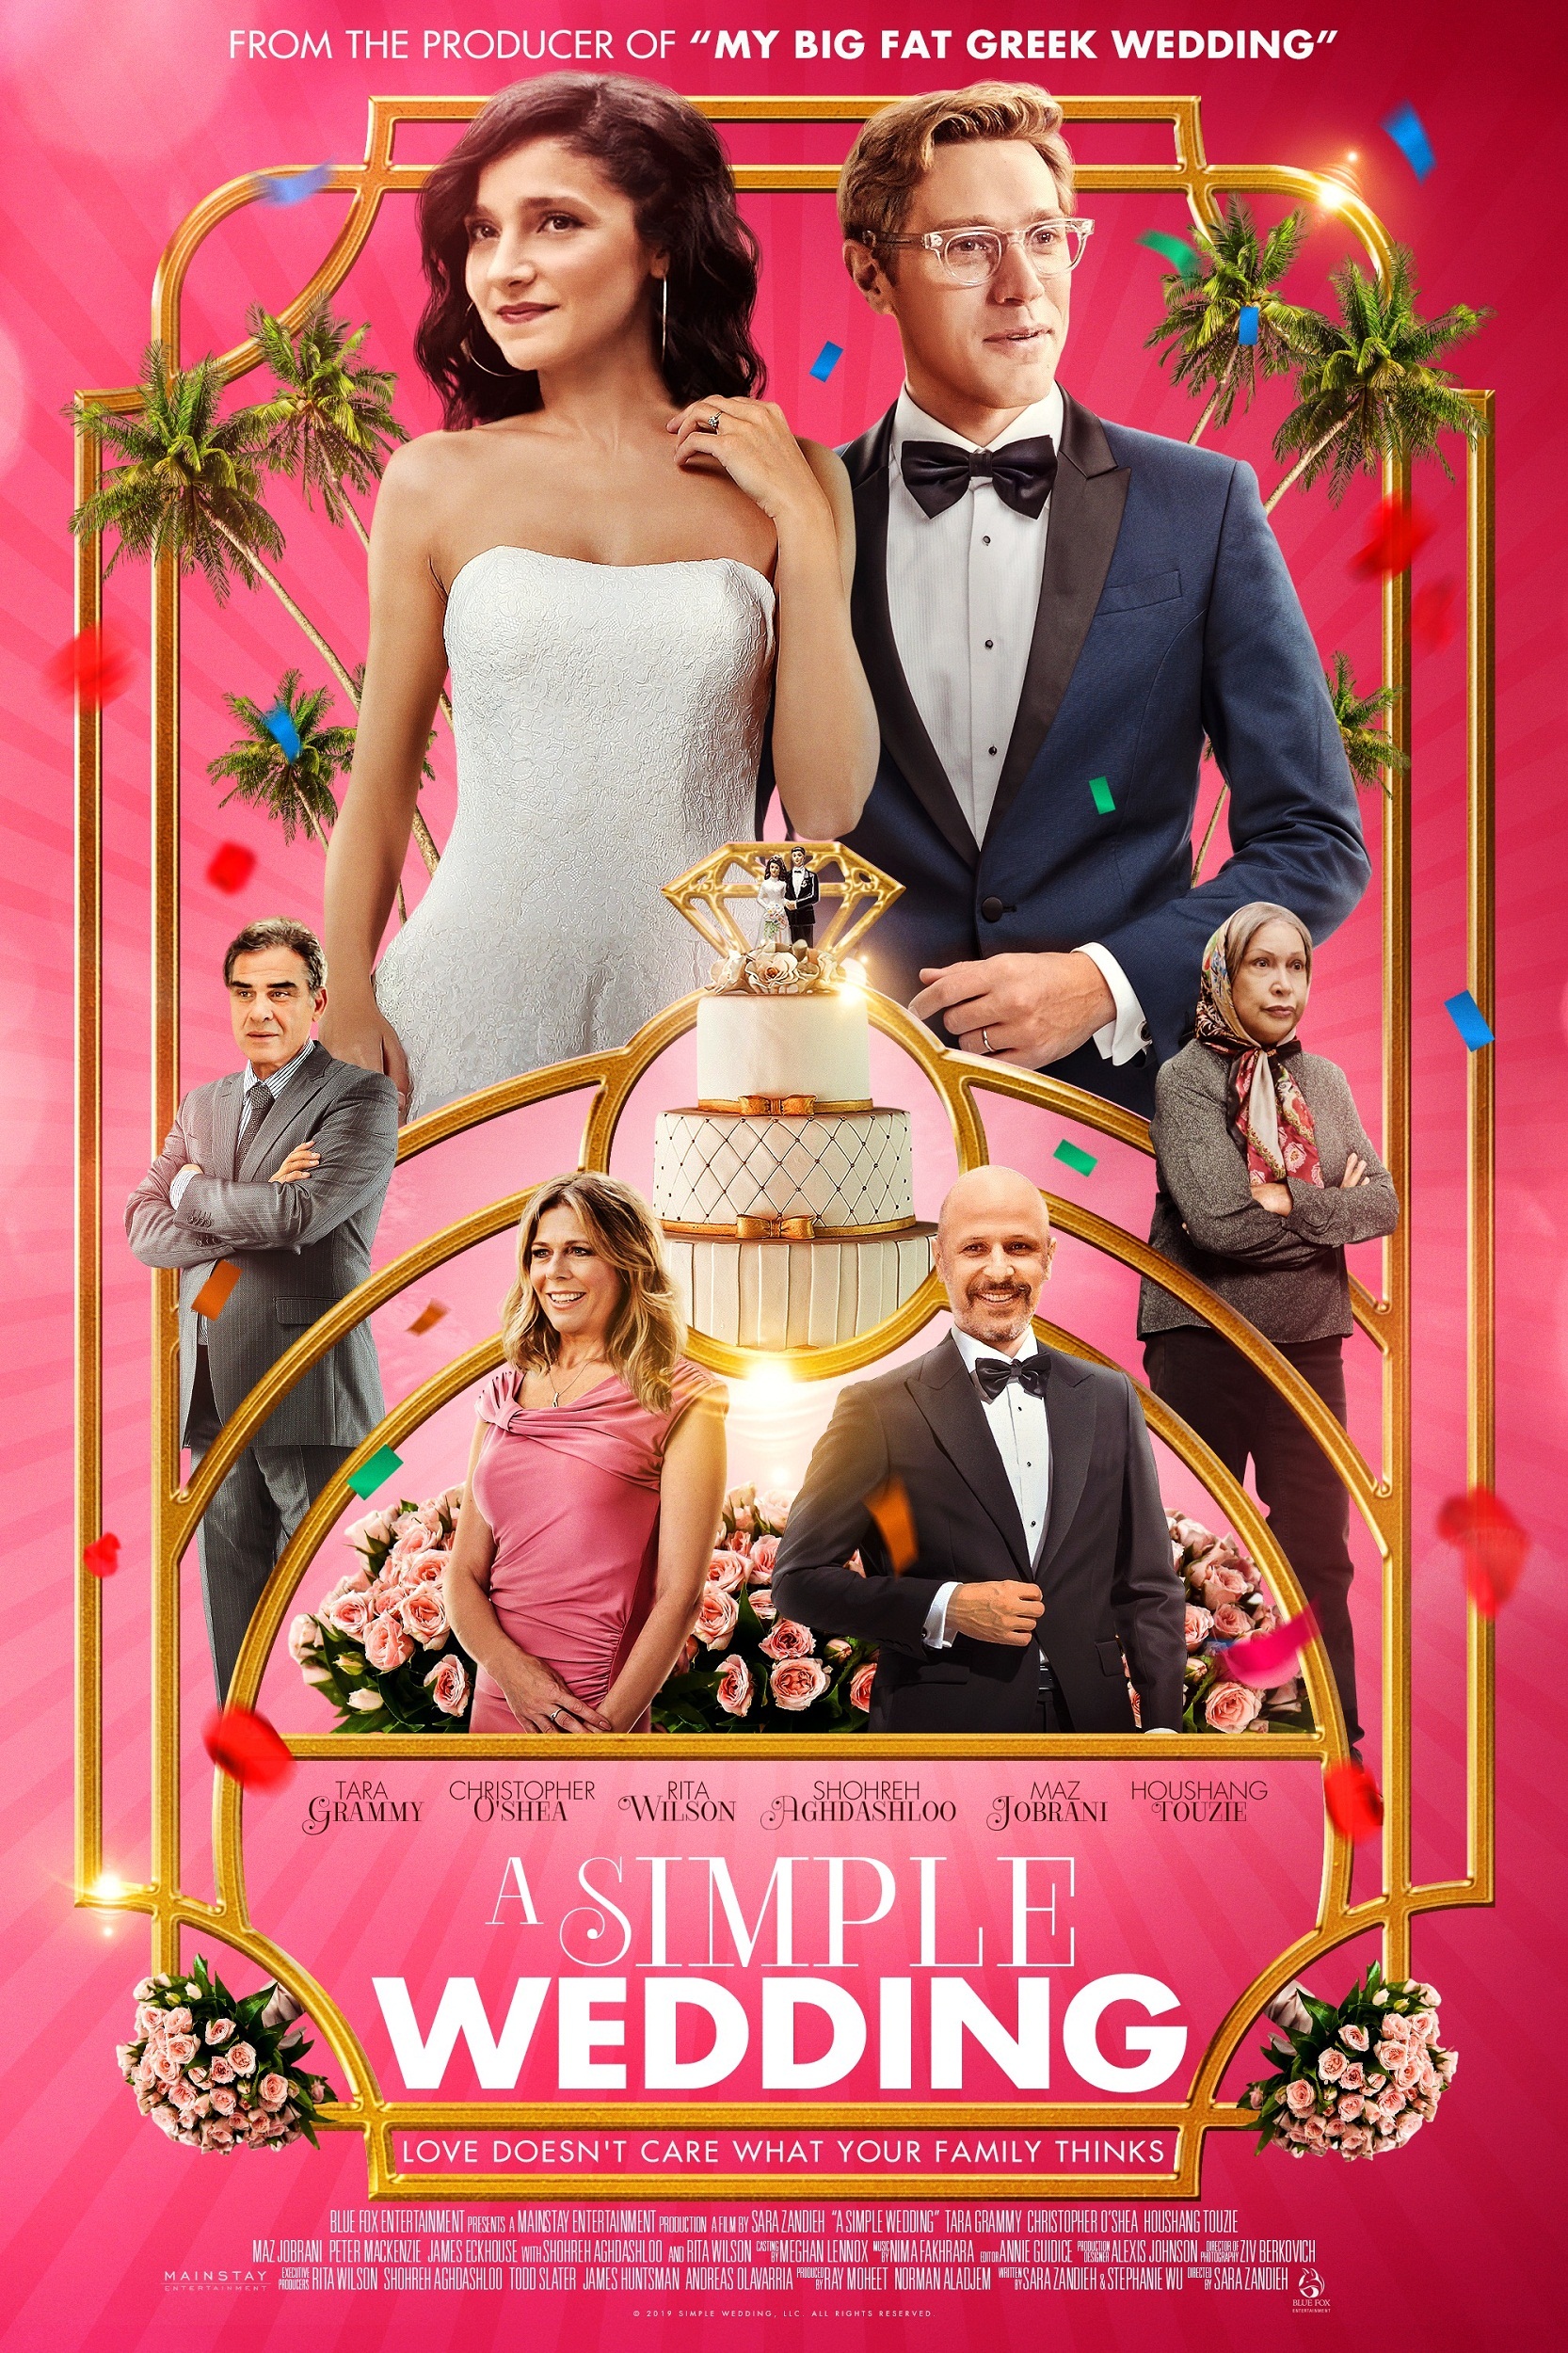 MovieGoers.me - A Simple Wedding | Tara Grammy, Shohreh ...